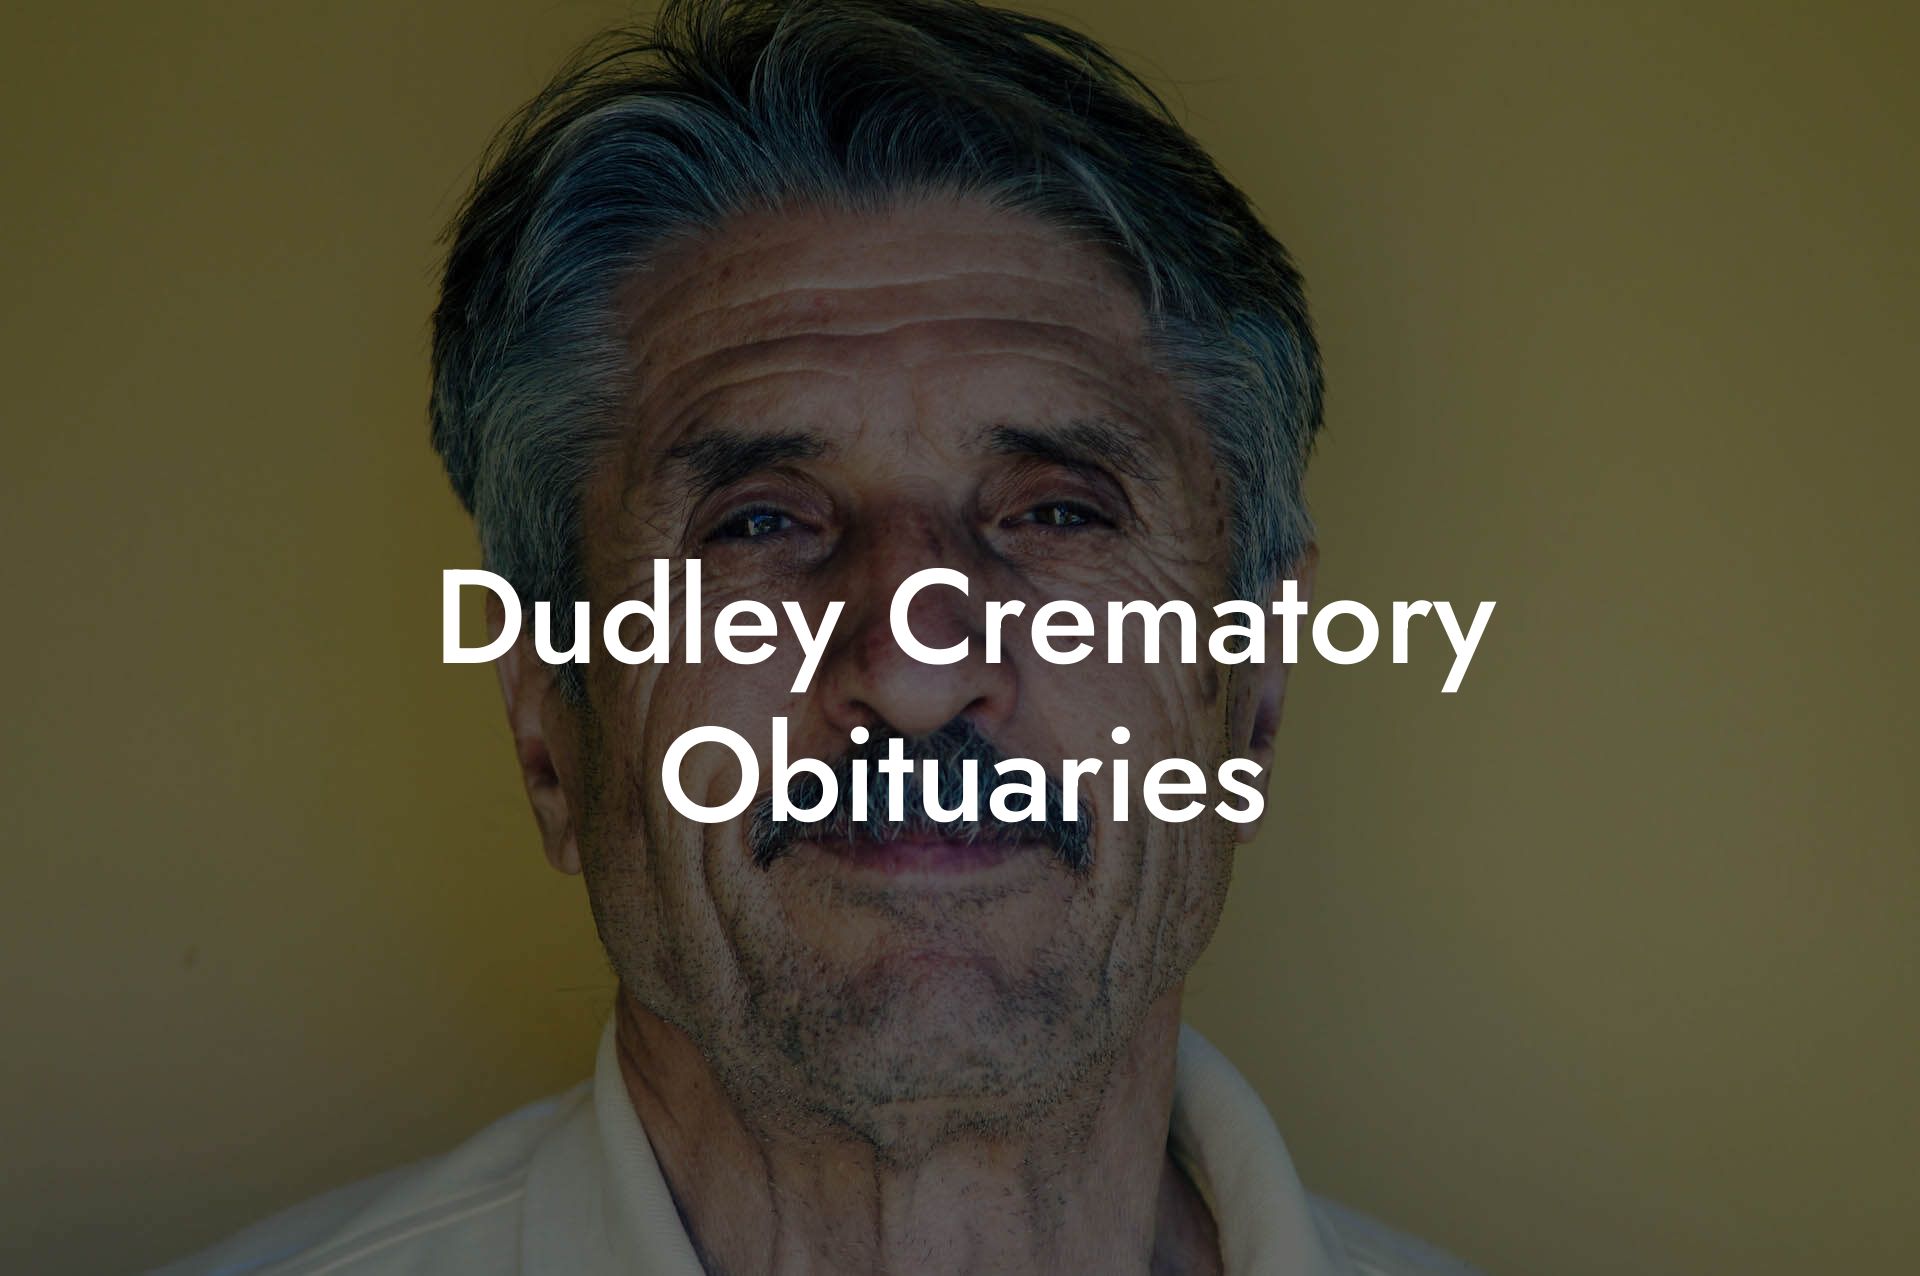 Dudley Crematory Obituaries